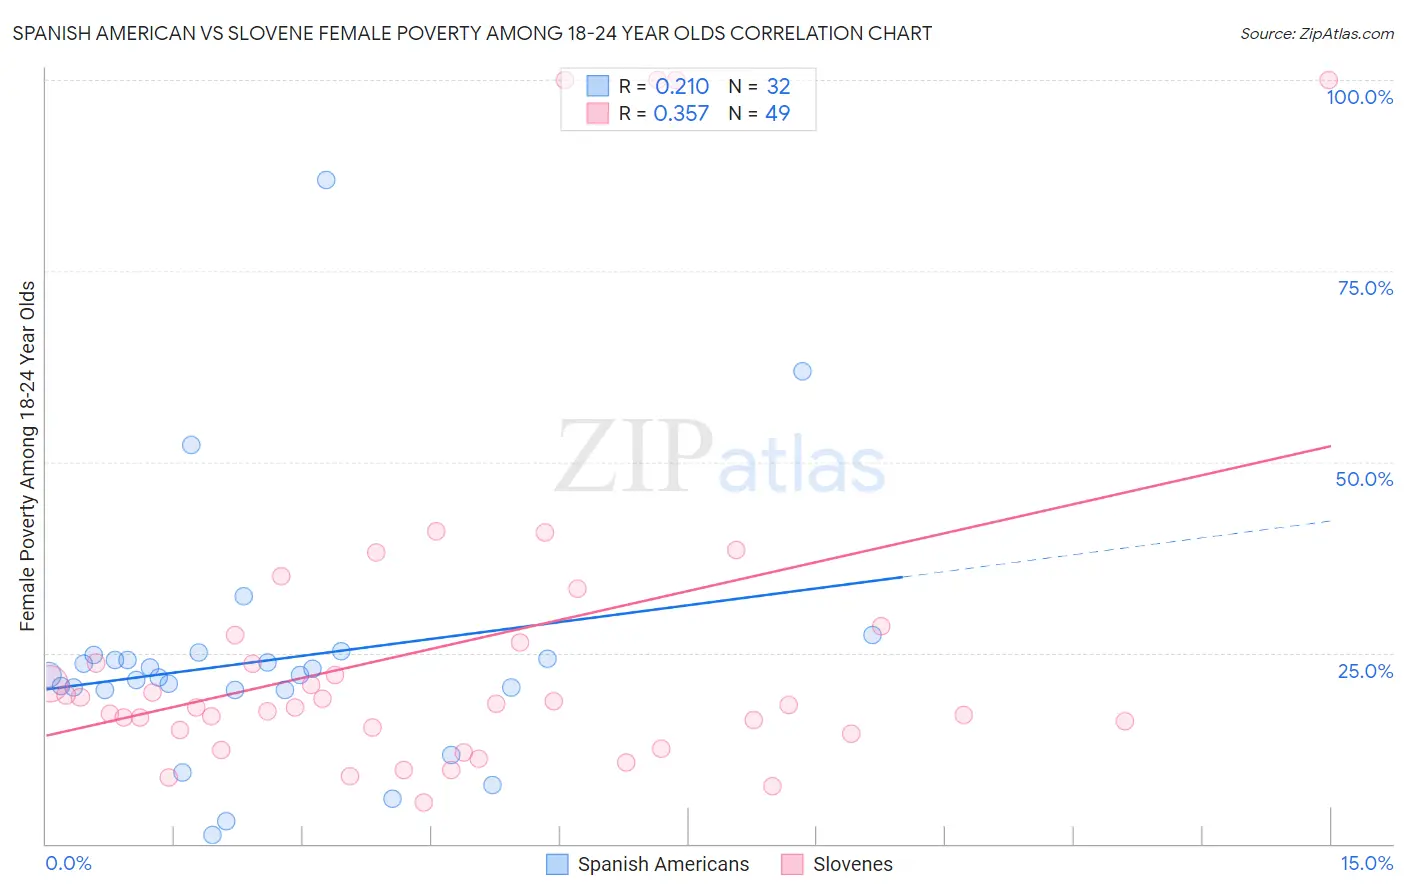 Spanish American vs Slovene Female Poverty Among 18-24 Year Olds